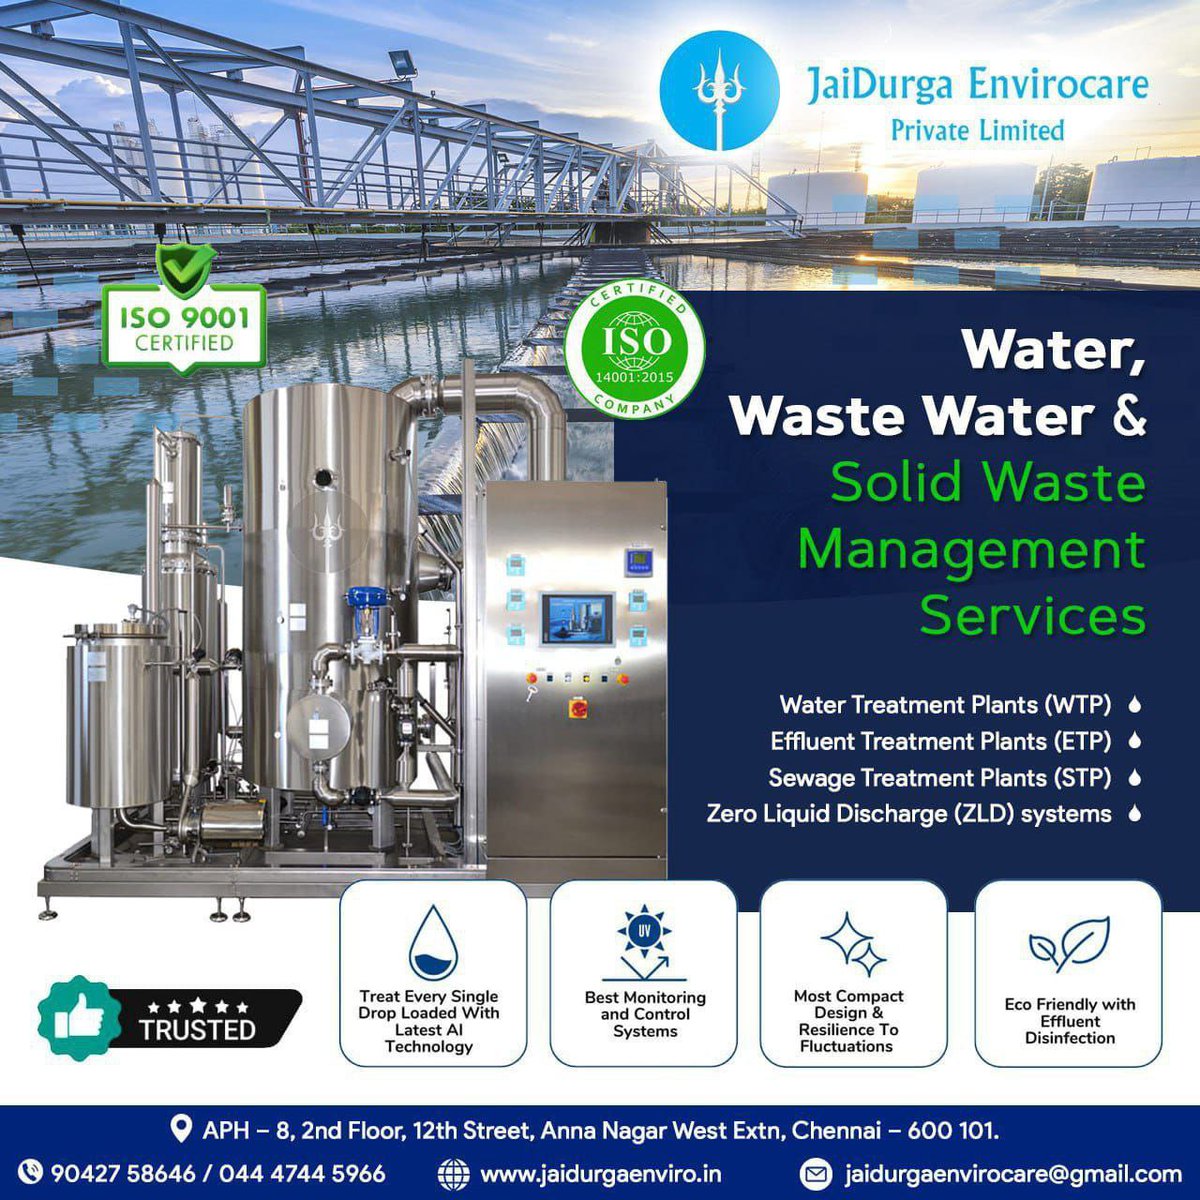 #JaiDurgaEnvirocare Leads the Way Towards #SustainableWater and #WasteManagementSolutions

livechennai.com/detailnews.asp…